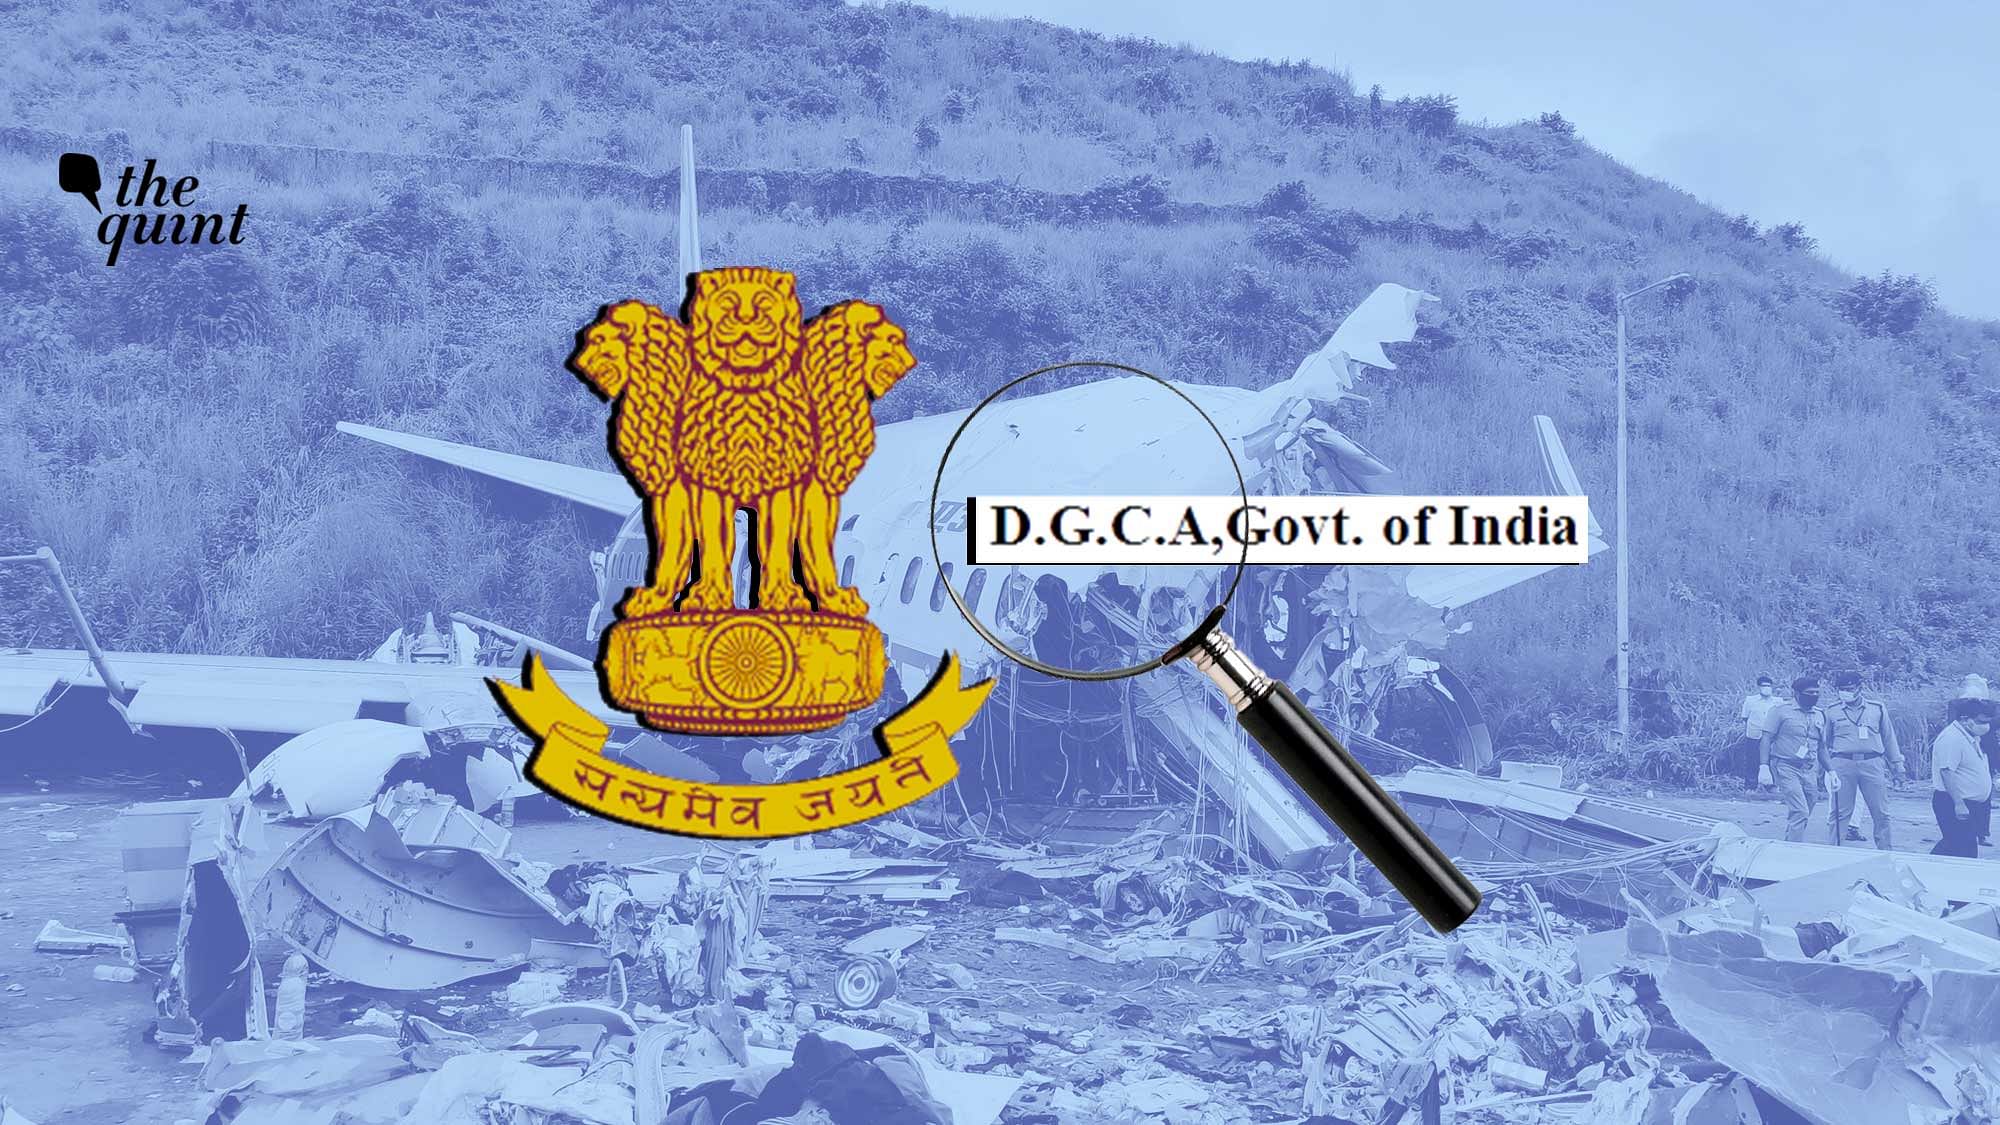 Image of Air India Express plane crash at Kozhikode and DGCA logo, used for representational purposes.